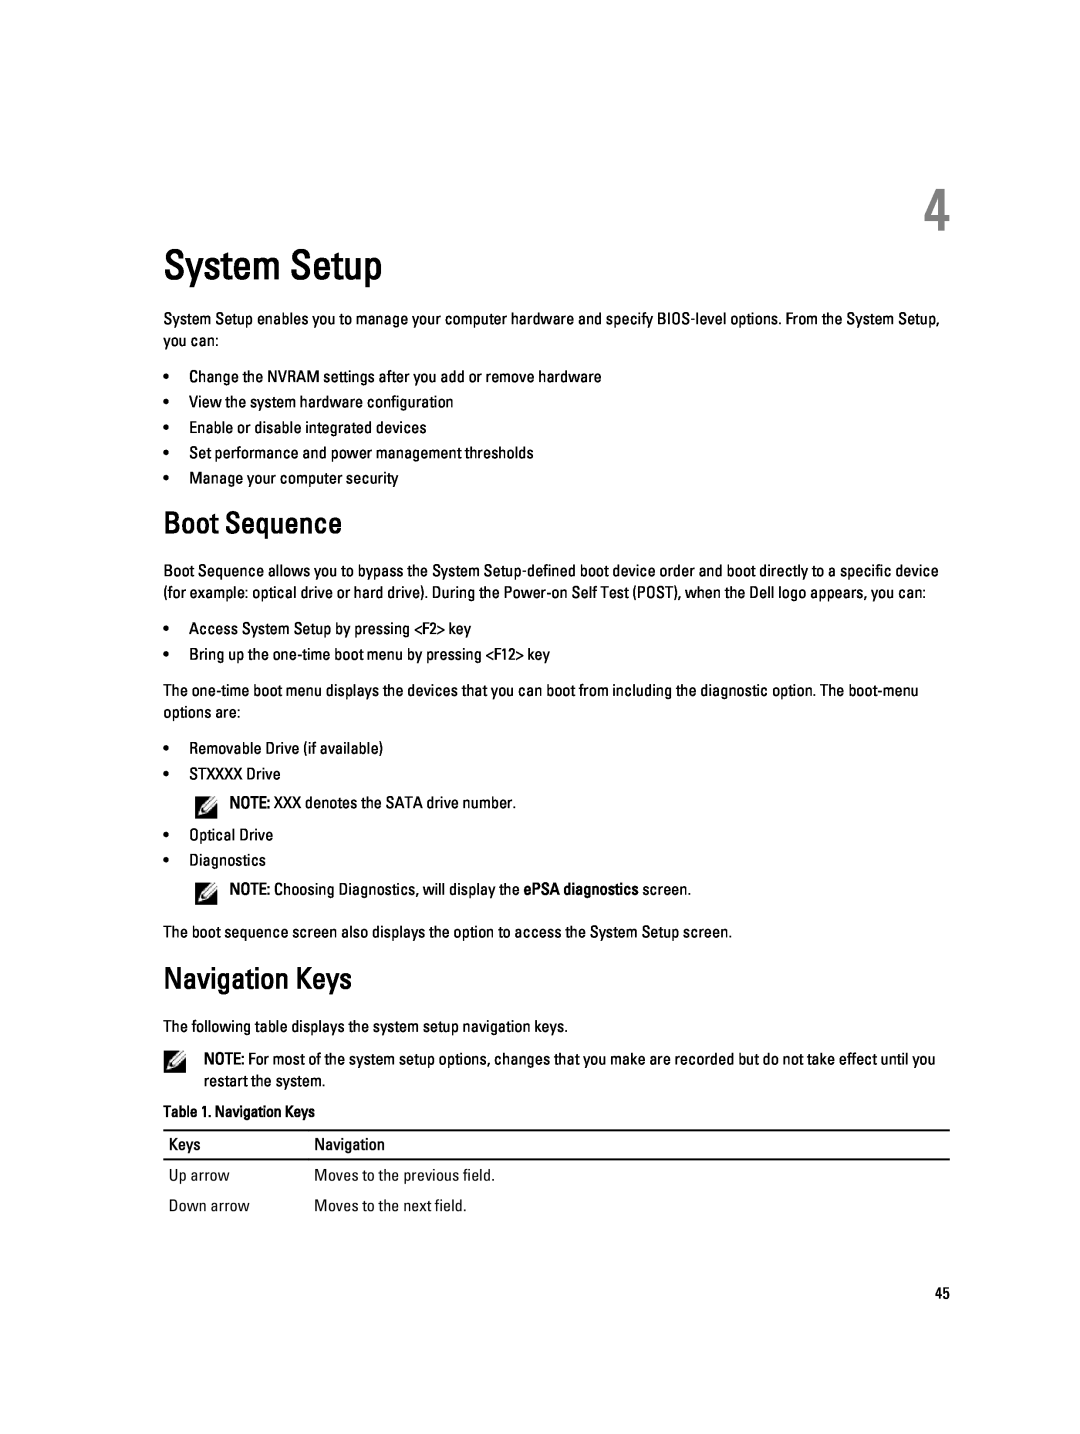 Dell T5610 owner manual System Setup, Boot Sequence, Navigation Keys 